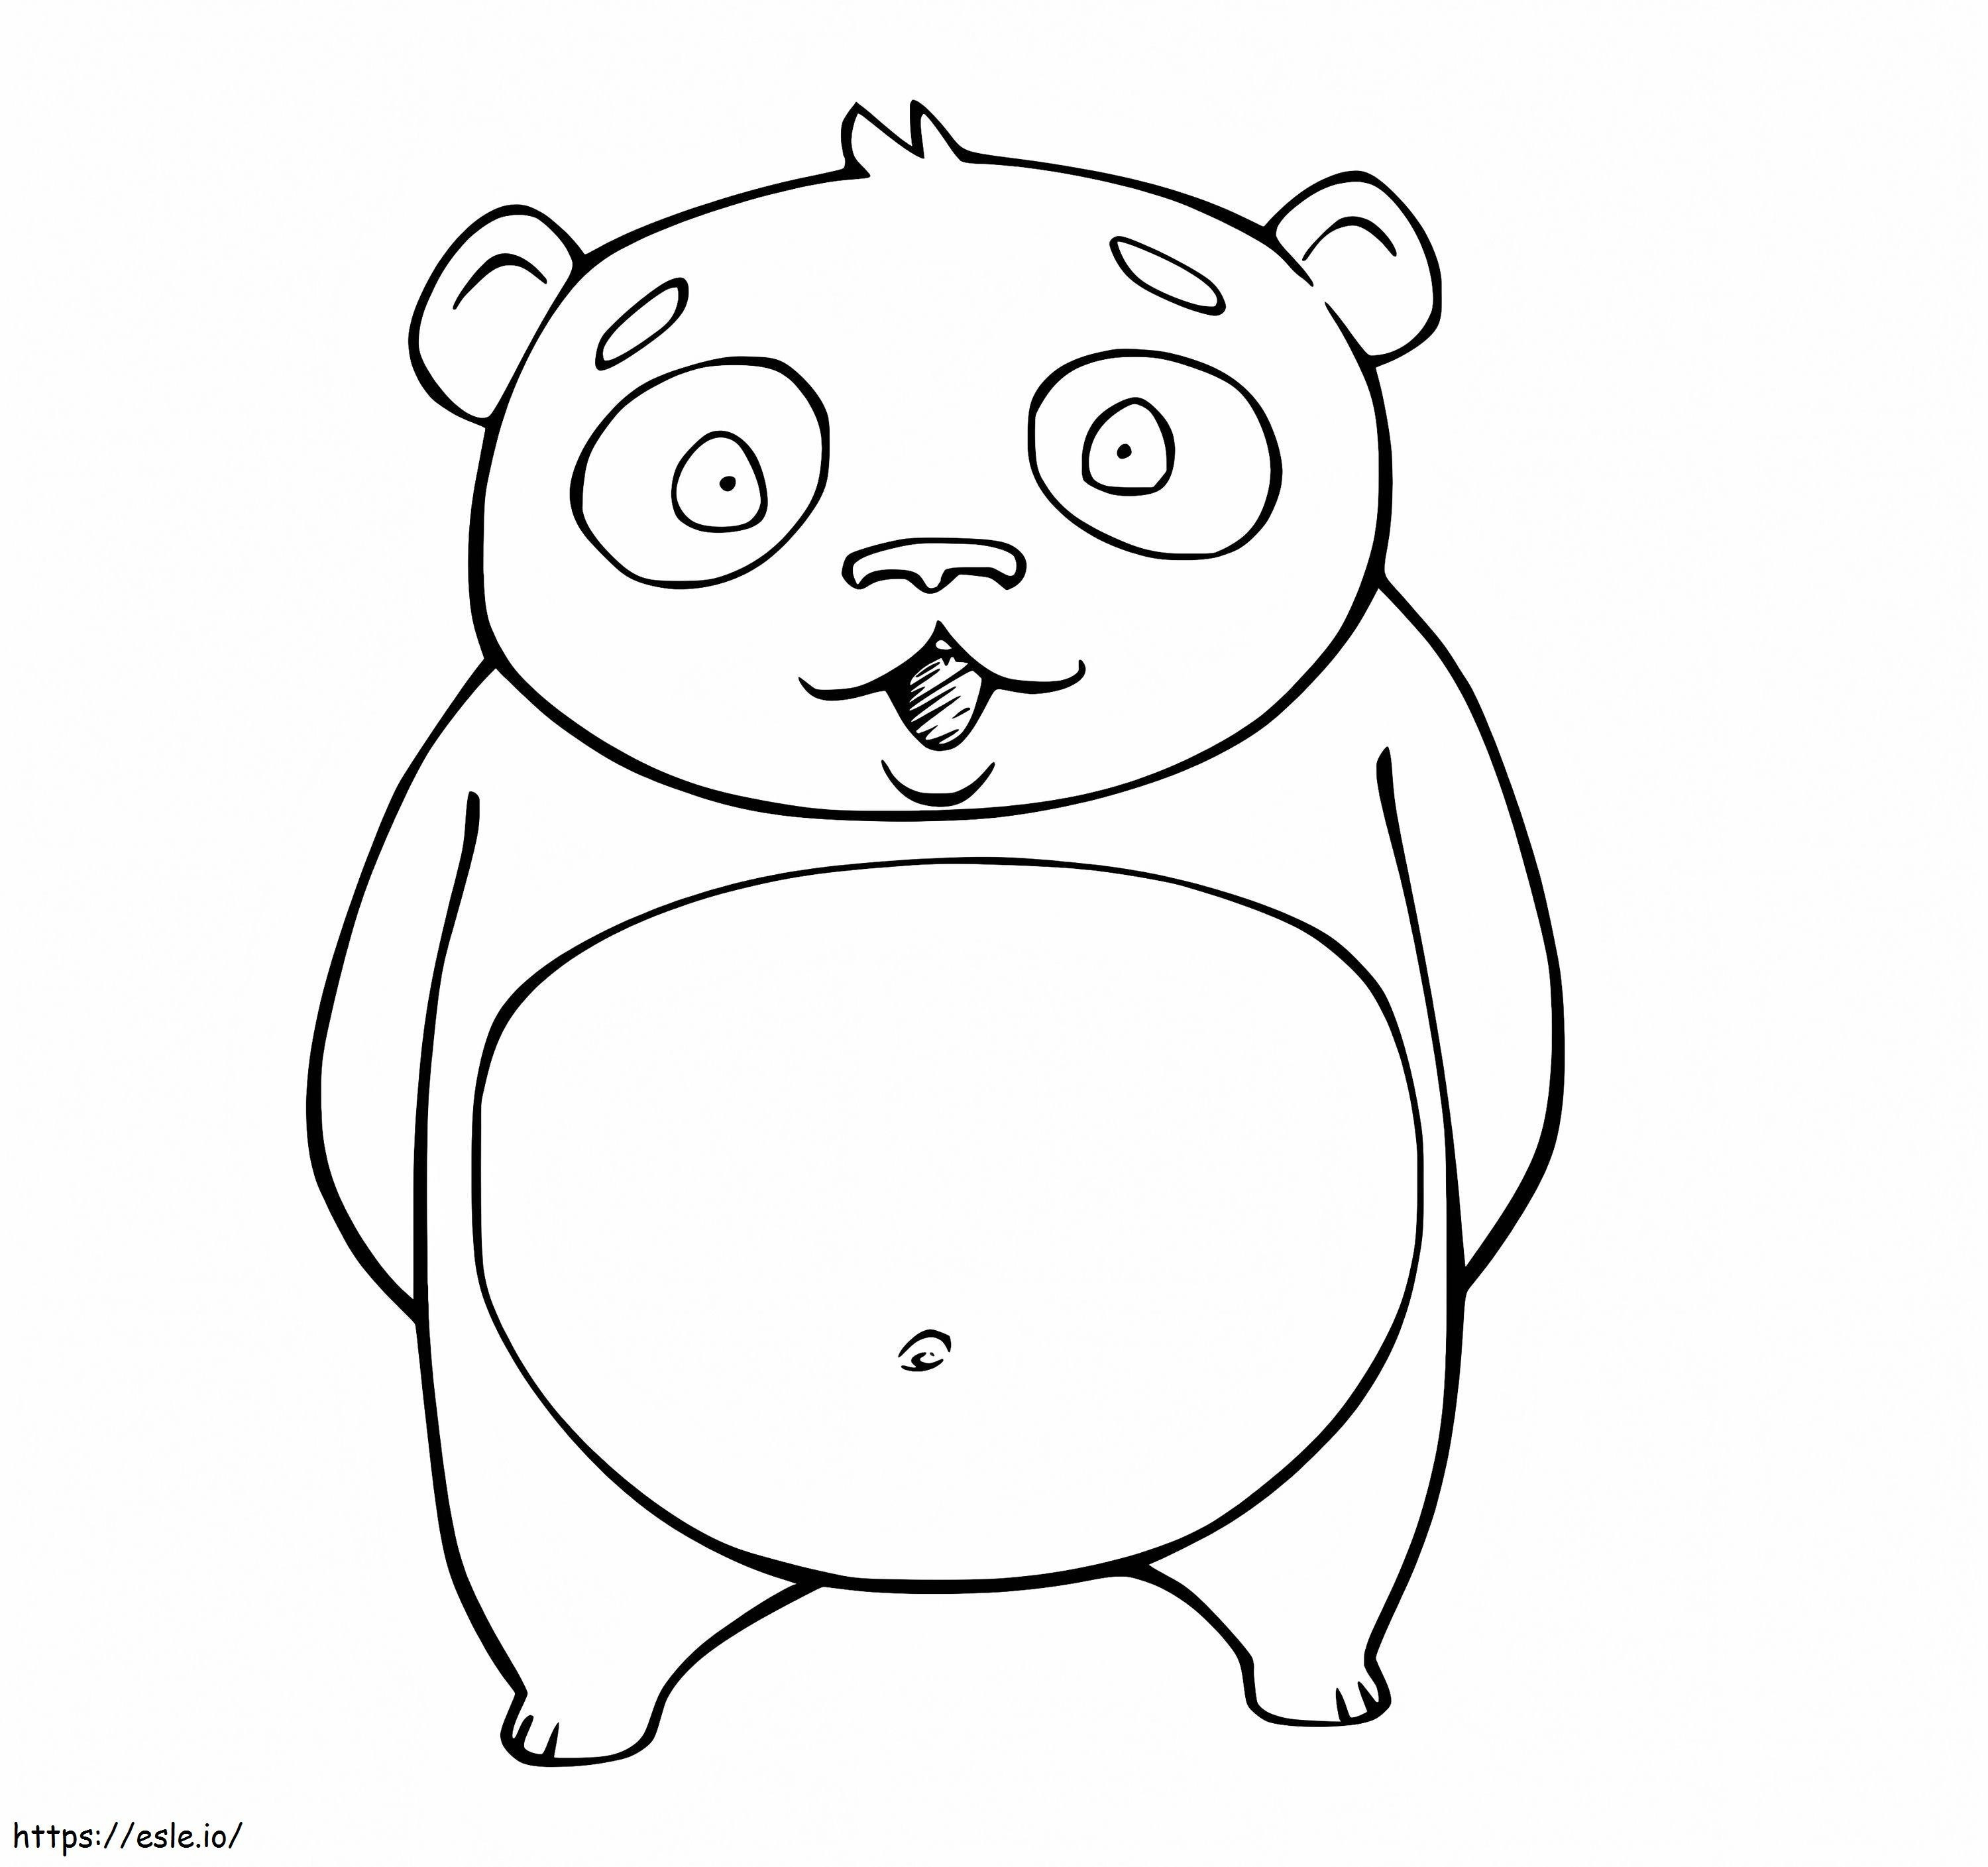 Panda divertido de dibujos animados para colorear